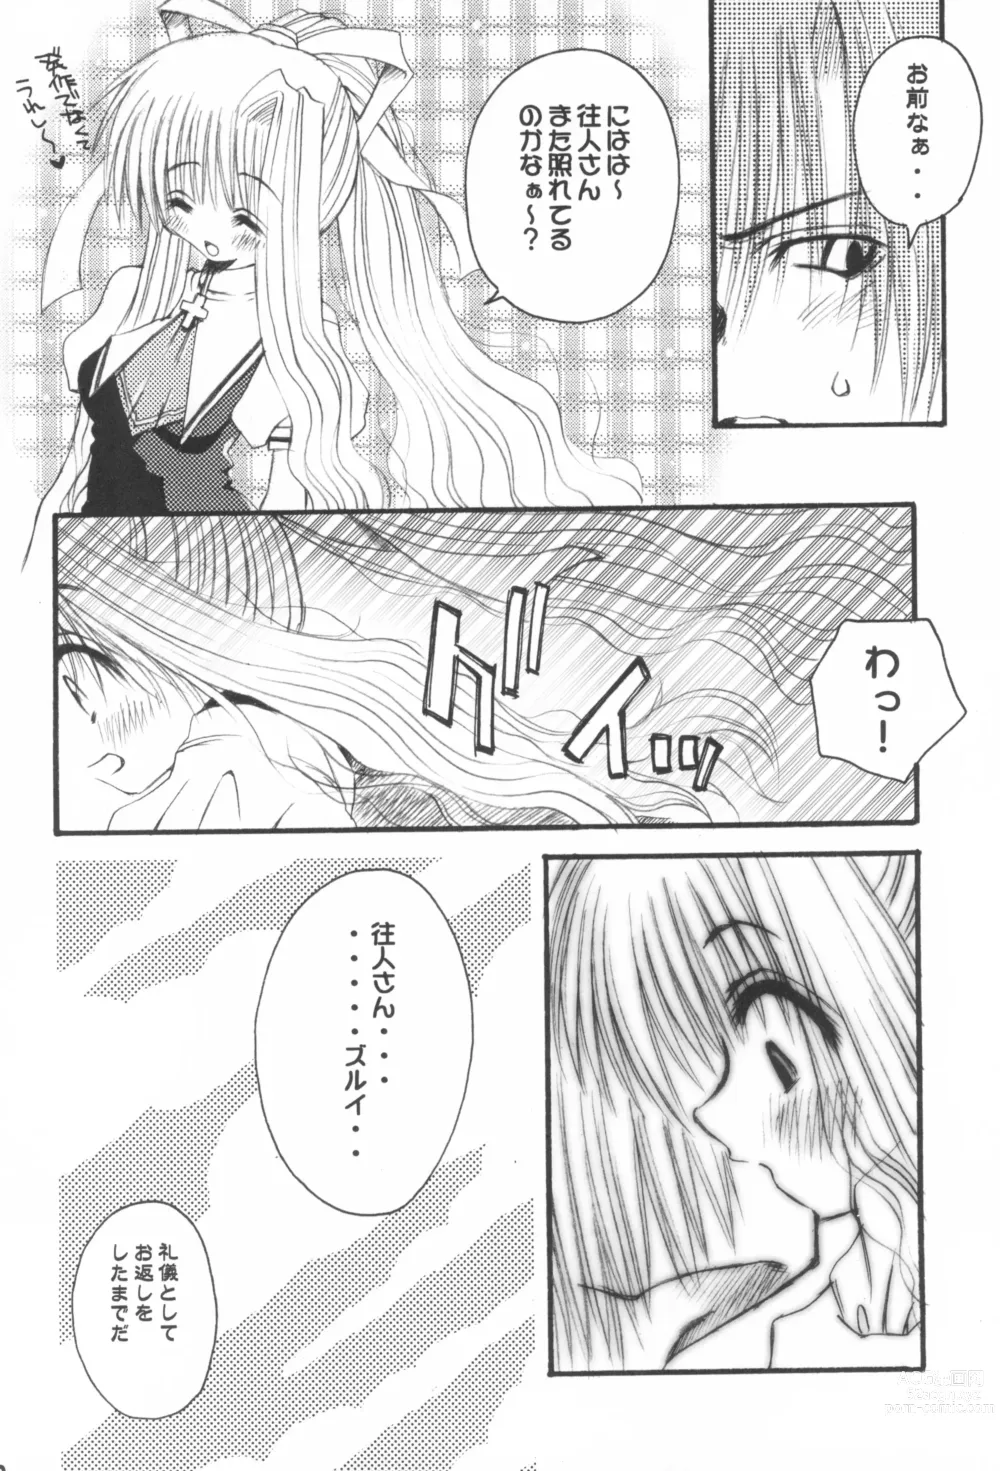 Page 29 of doujinshi Pinkey Hearts